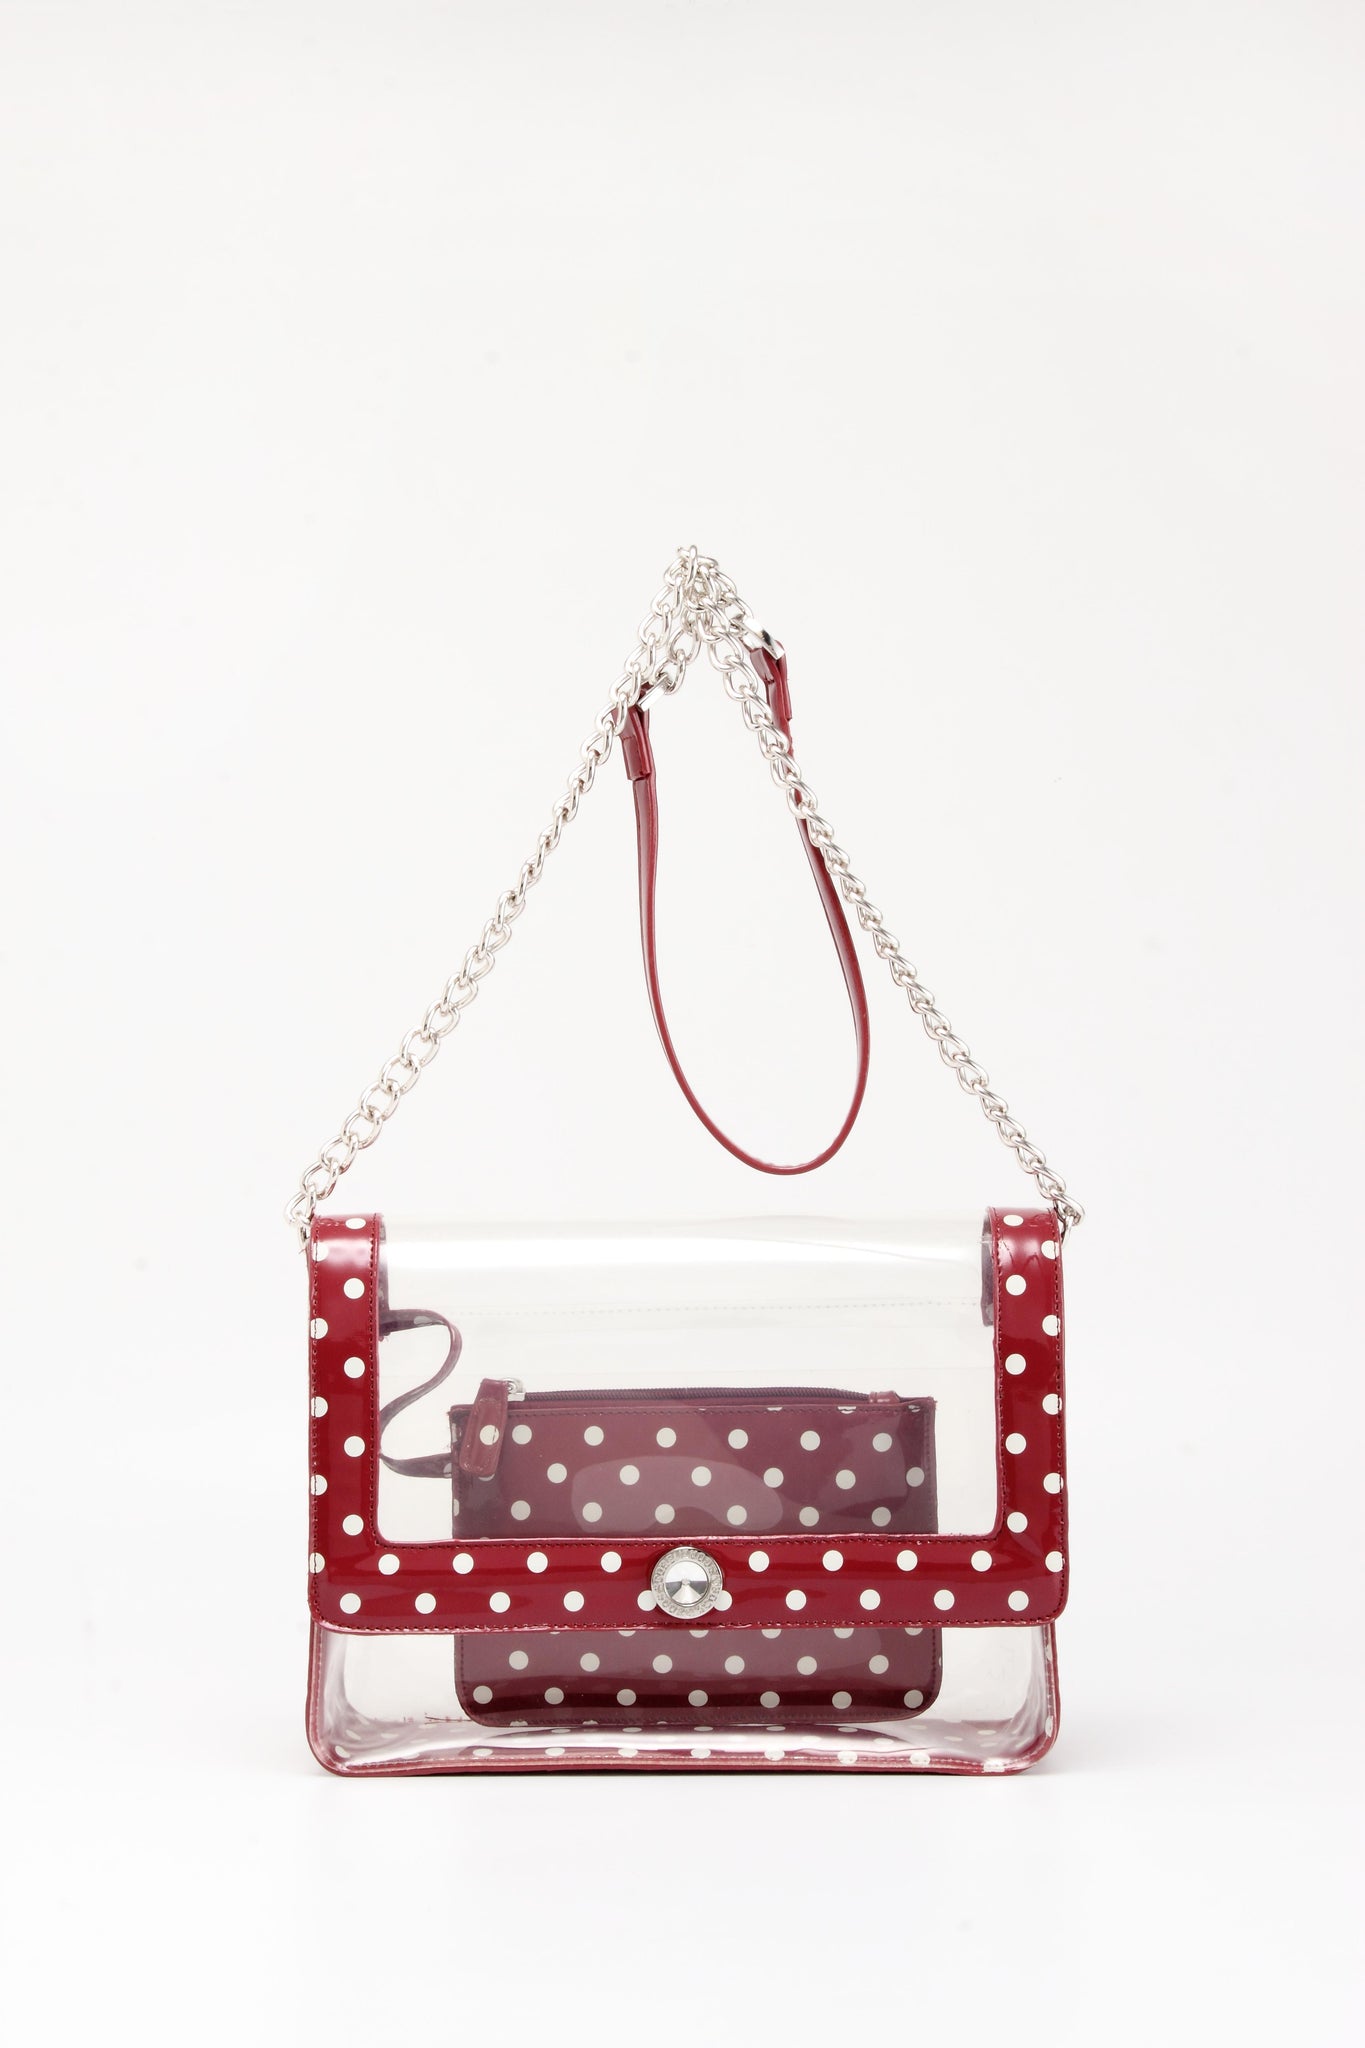 HOMEMAXS Fashion Clear Plastic Tote Bag Handbag Simple Large Capacity  Sholder Bag Jelly Purse (Pink) - Walmart.com